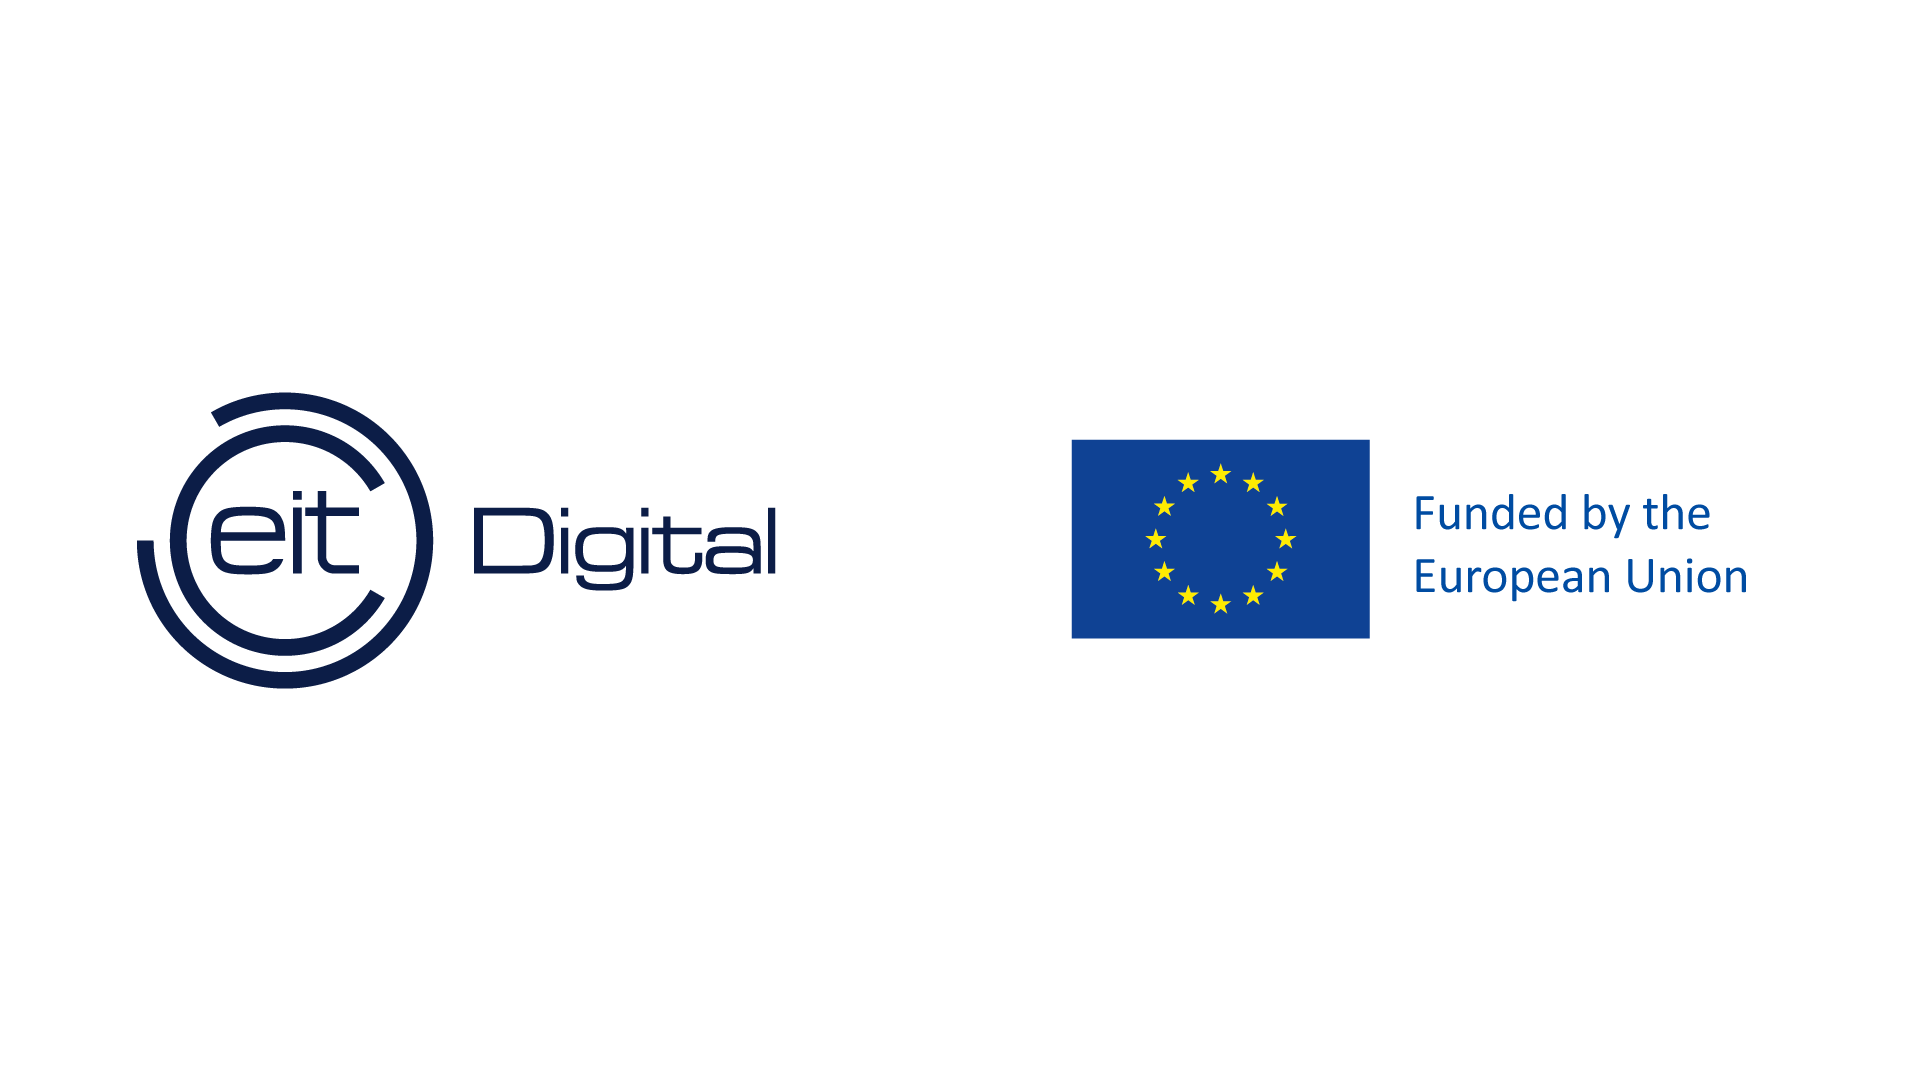 EIT Digital's logo